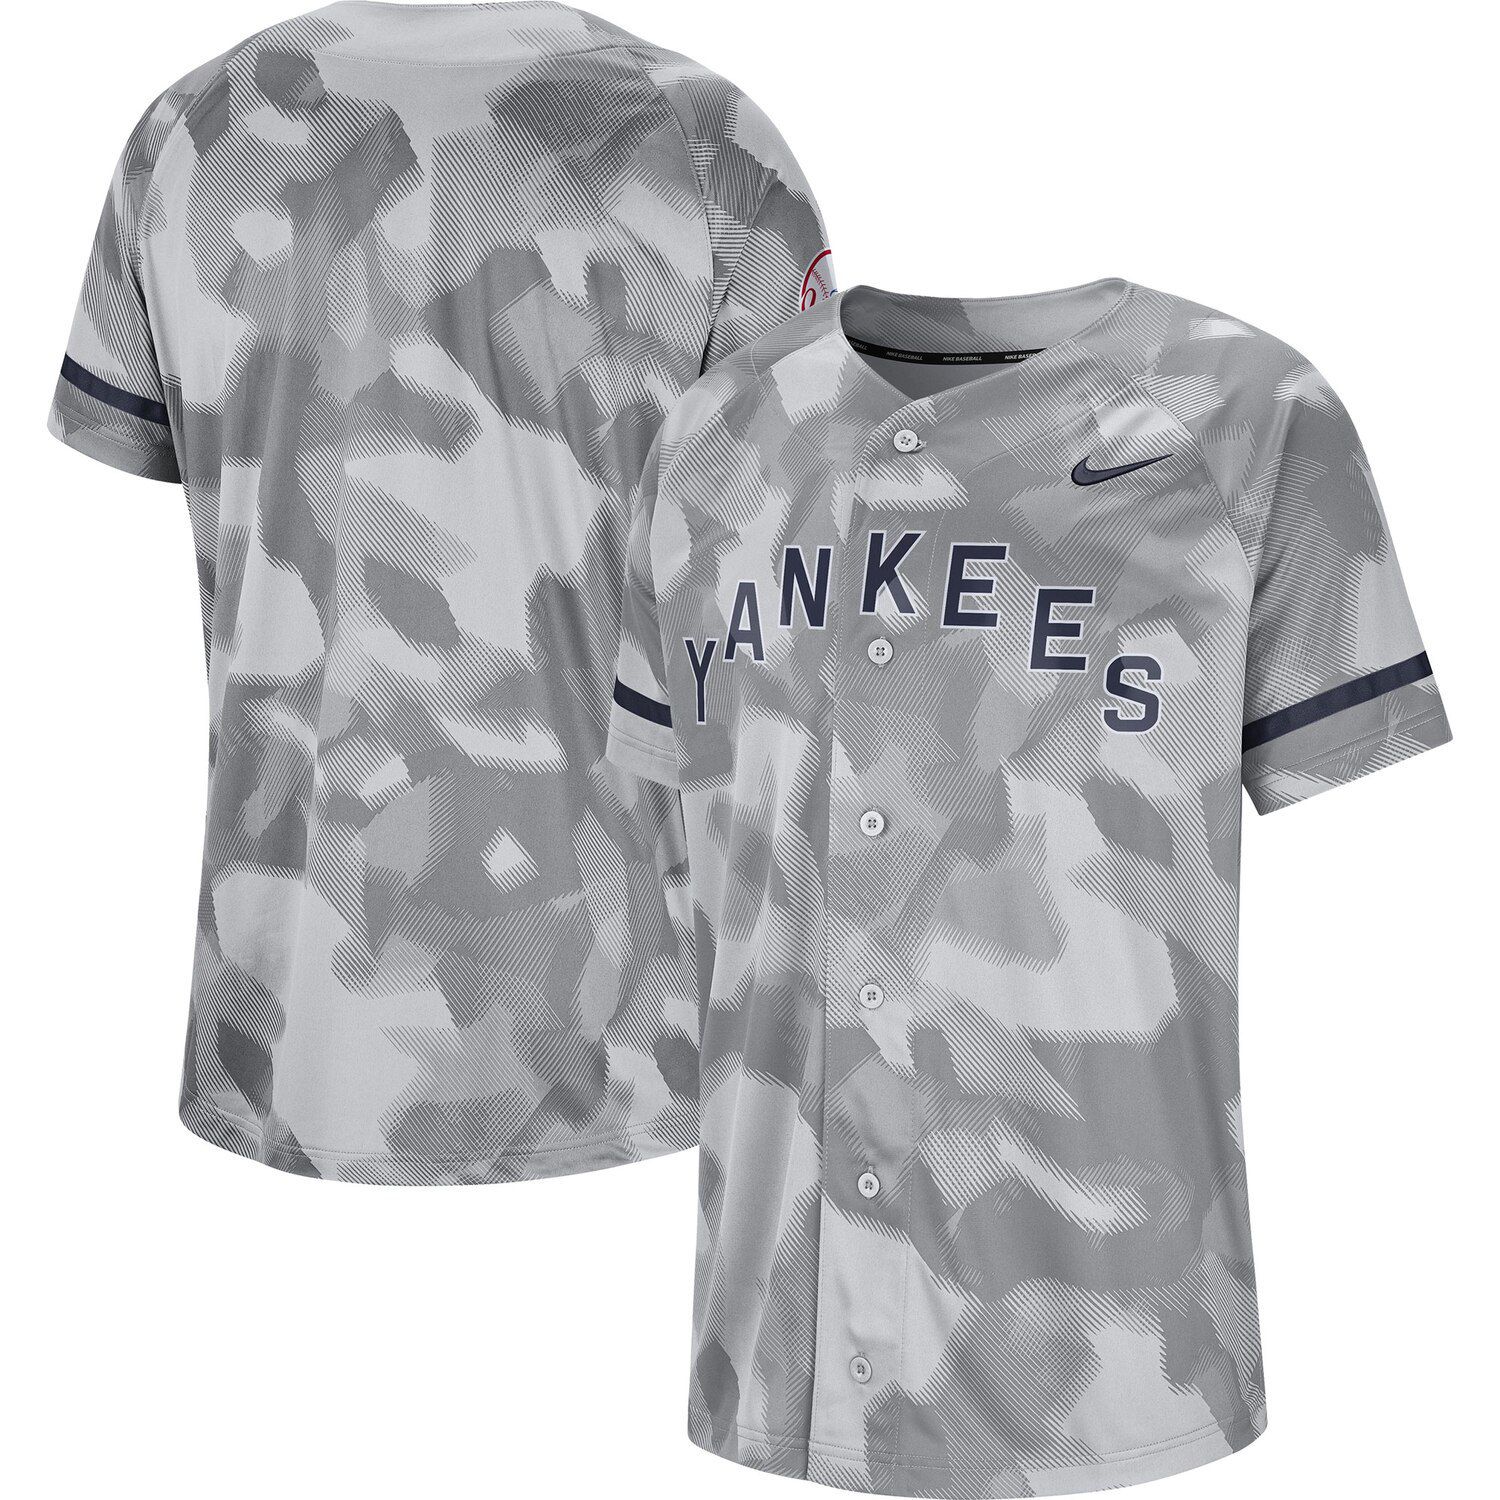 Nike Gray New York Yankees Camo Jersey